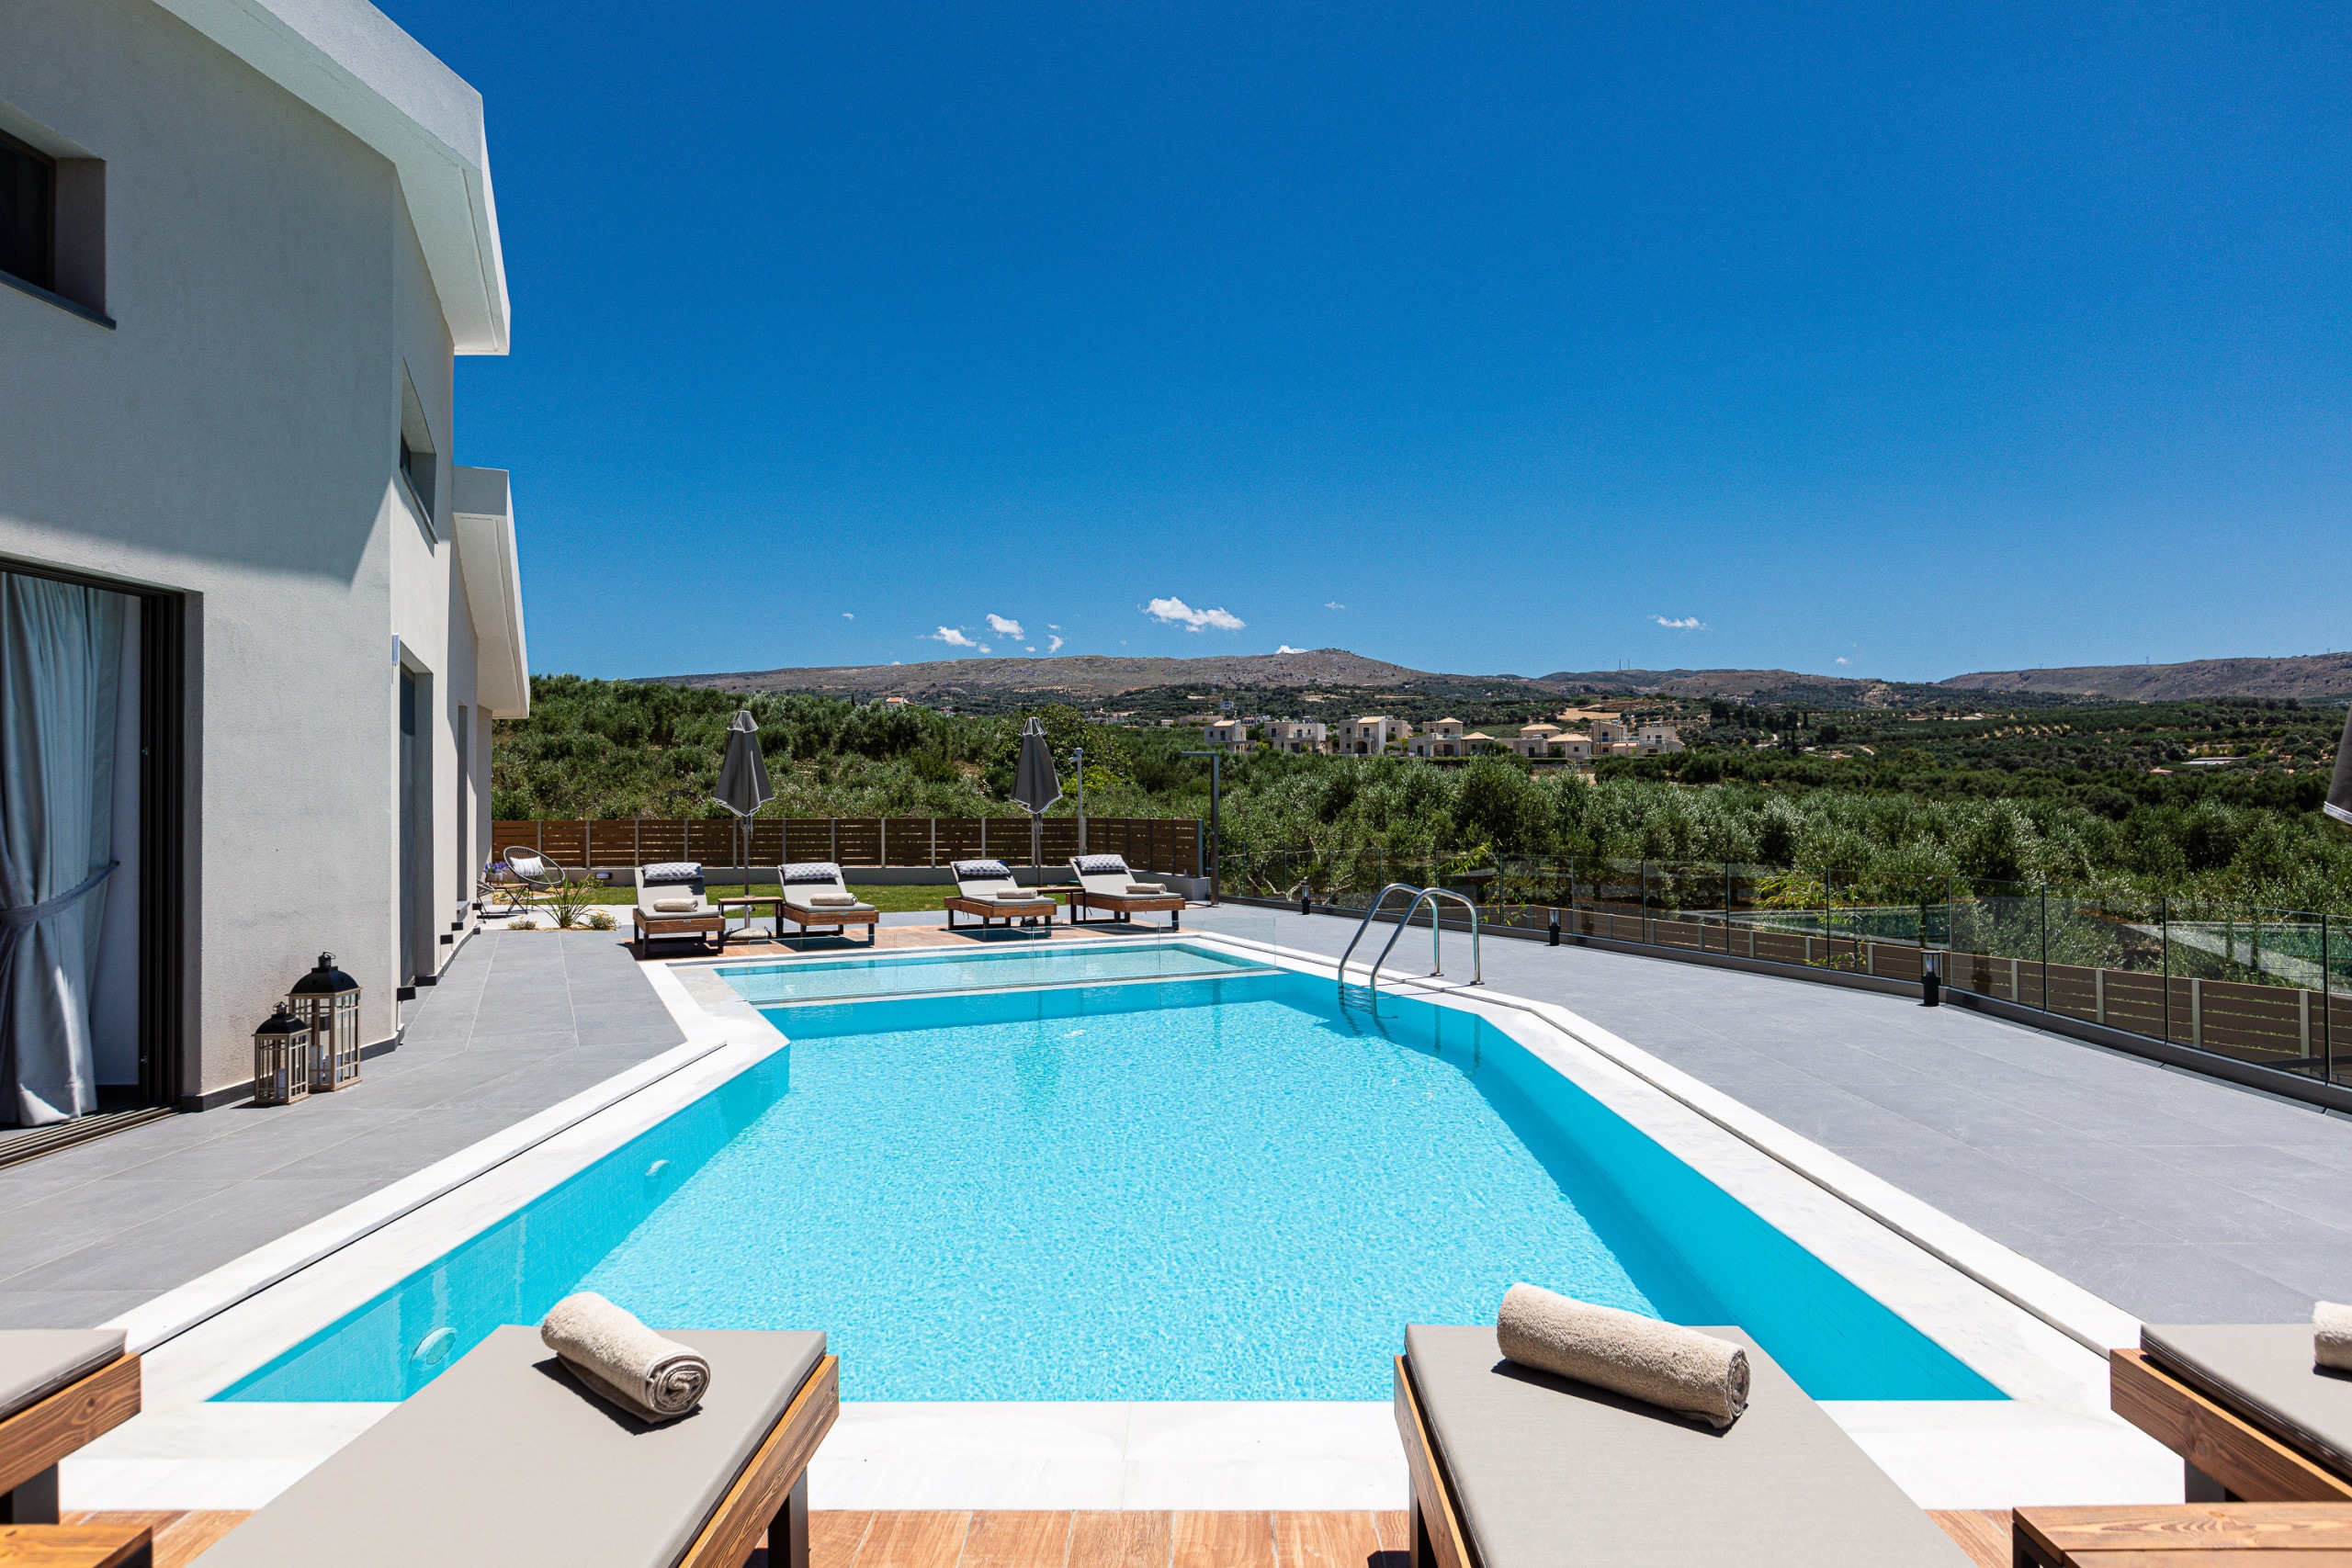 The amazing TreeTop Villa with a sensory driven design private pool